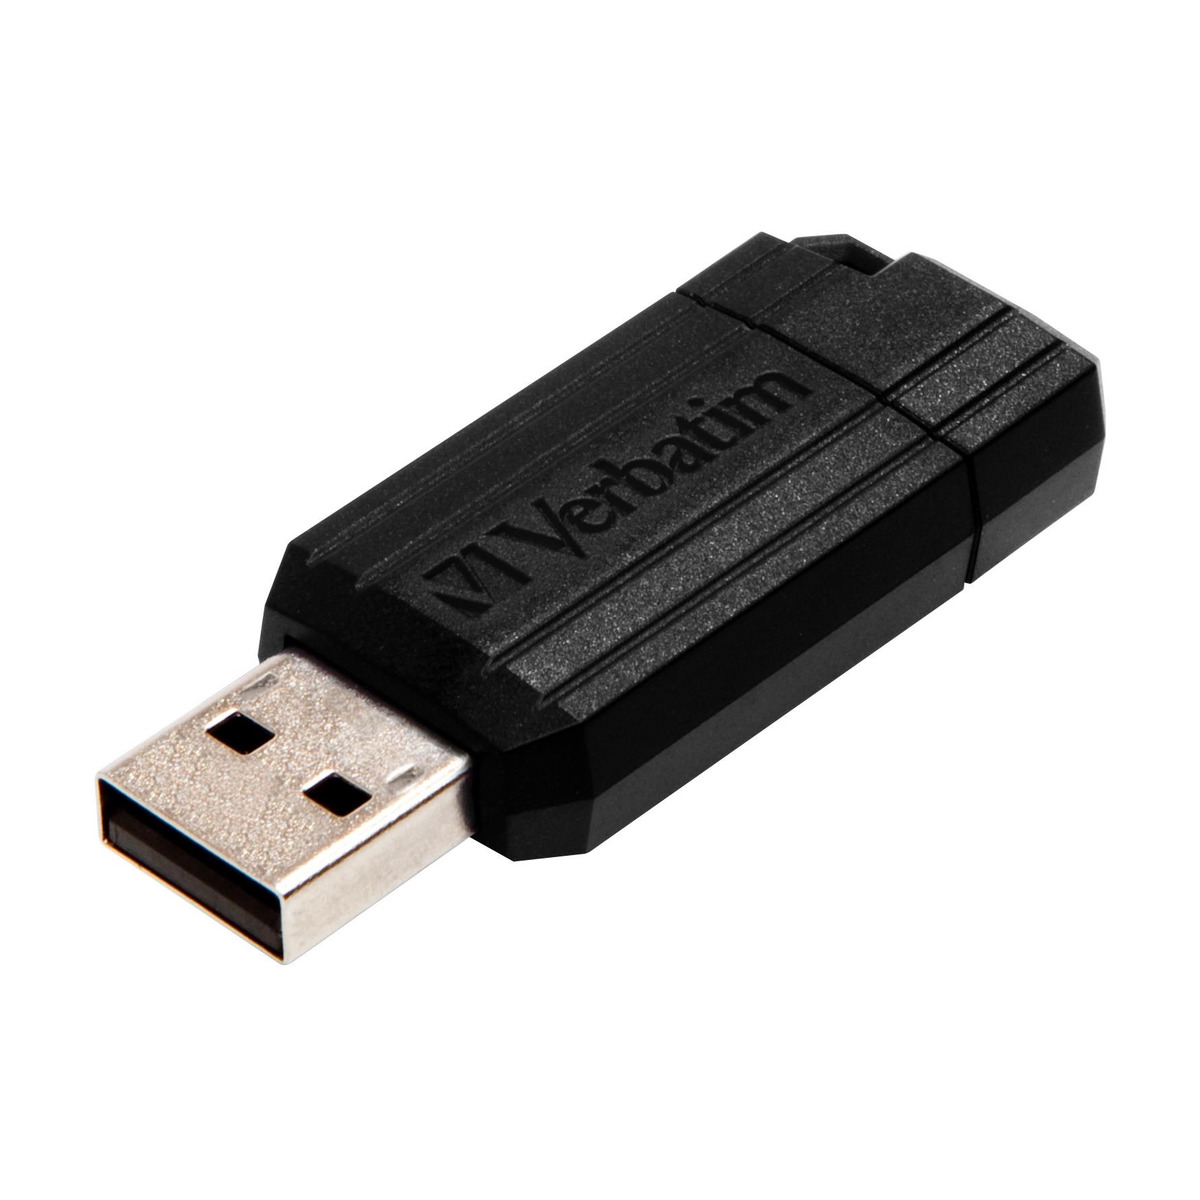 Øde pie Fritagelse VERBATIM PINSTRIPE USB 2.0 32GB SORT MEMORY STICK - Expert.dk